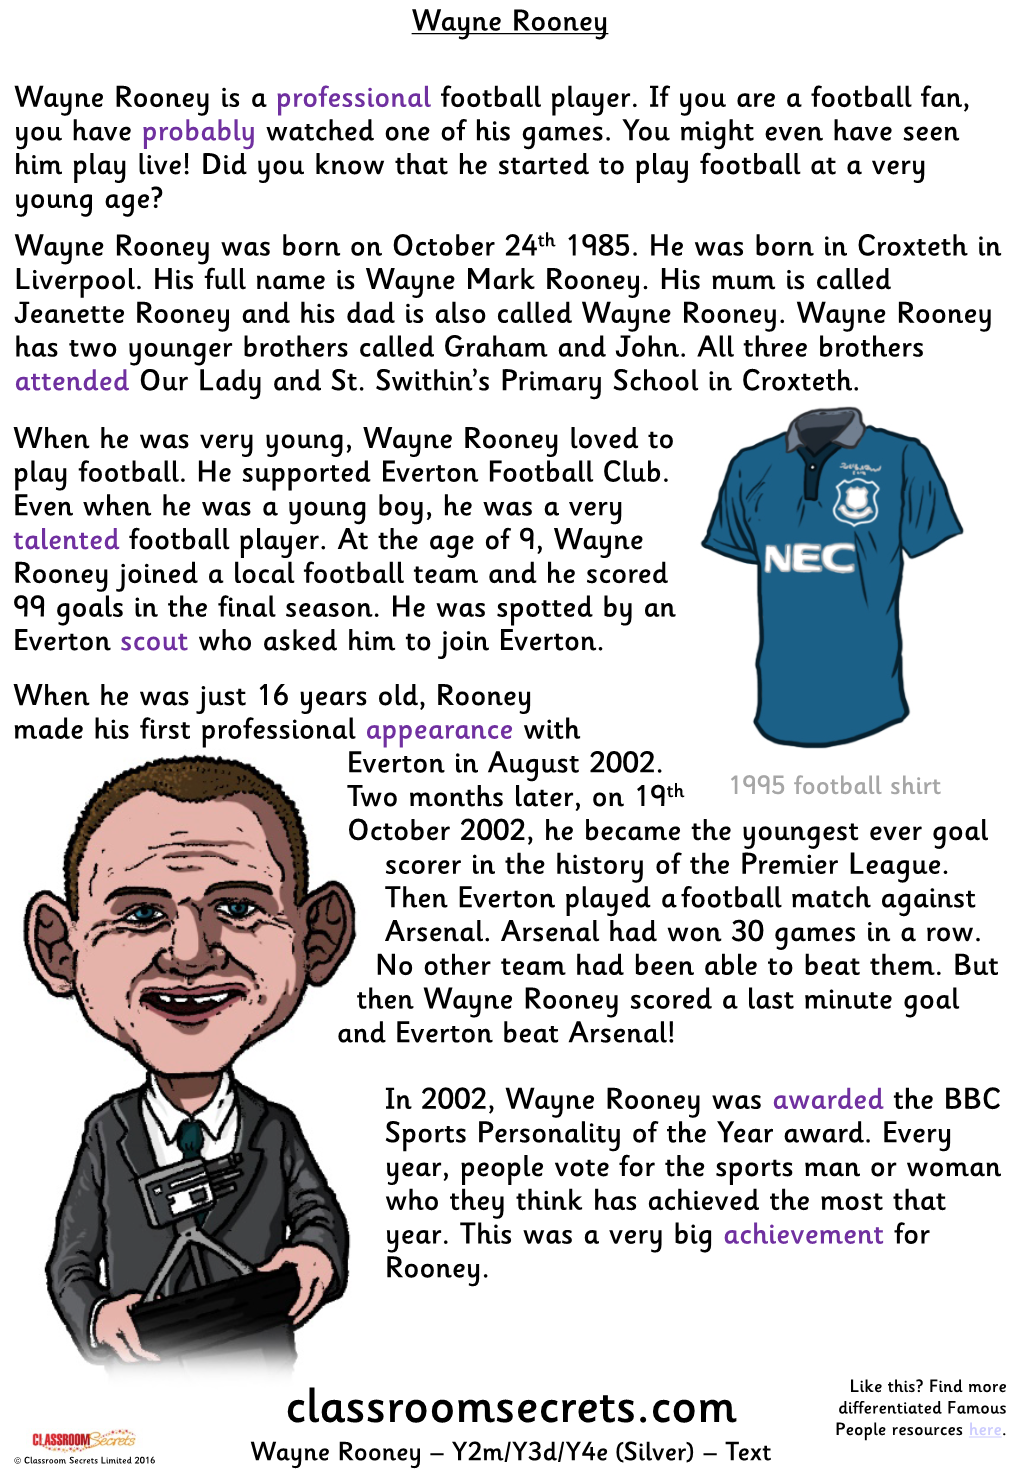 Wayne-Rooney- Reading Comprehension and SPAG.Pdf